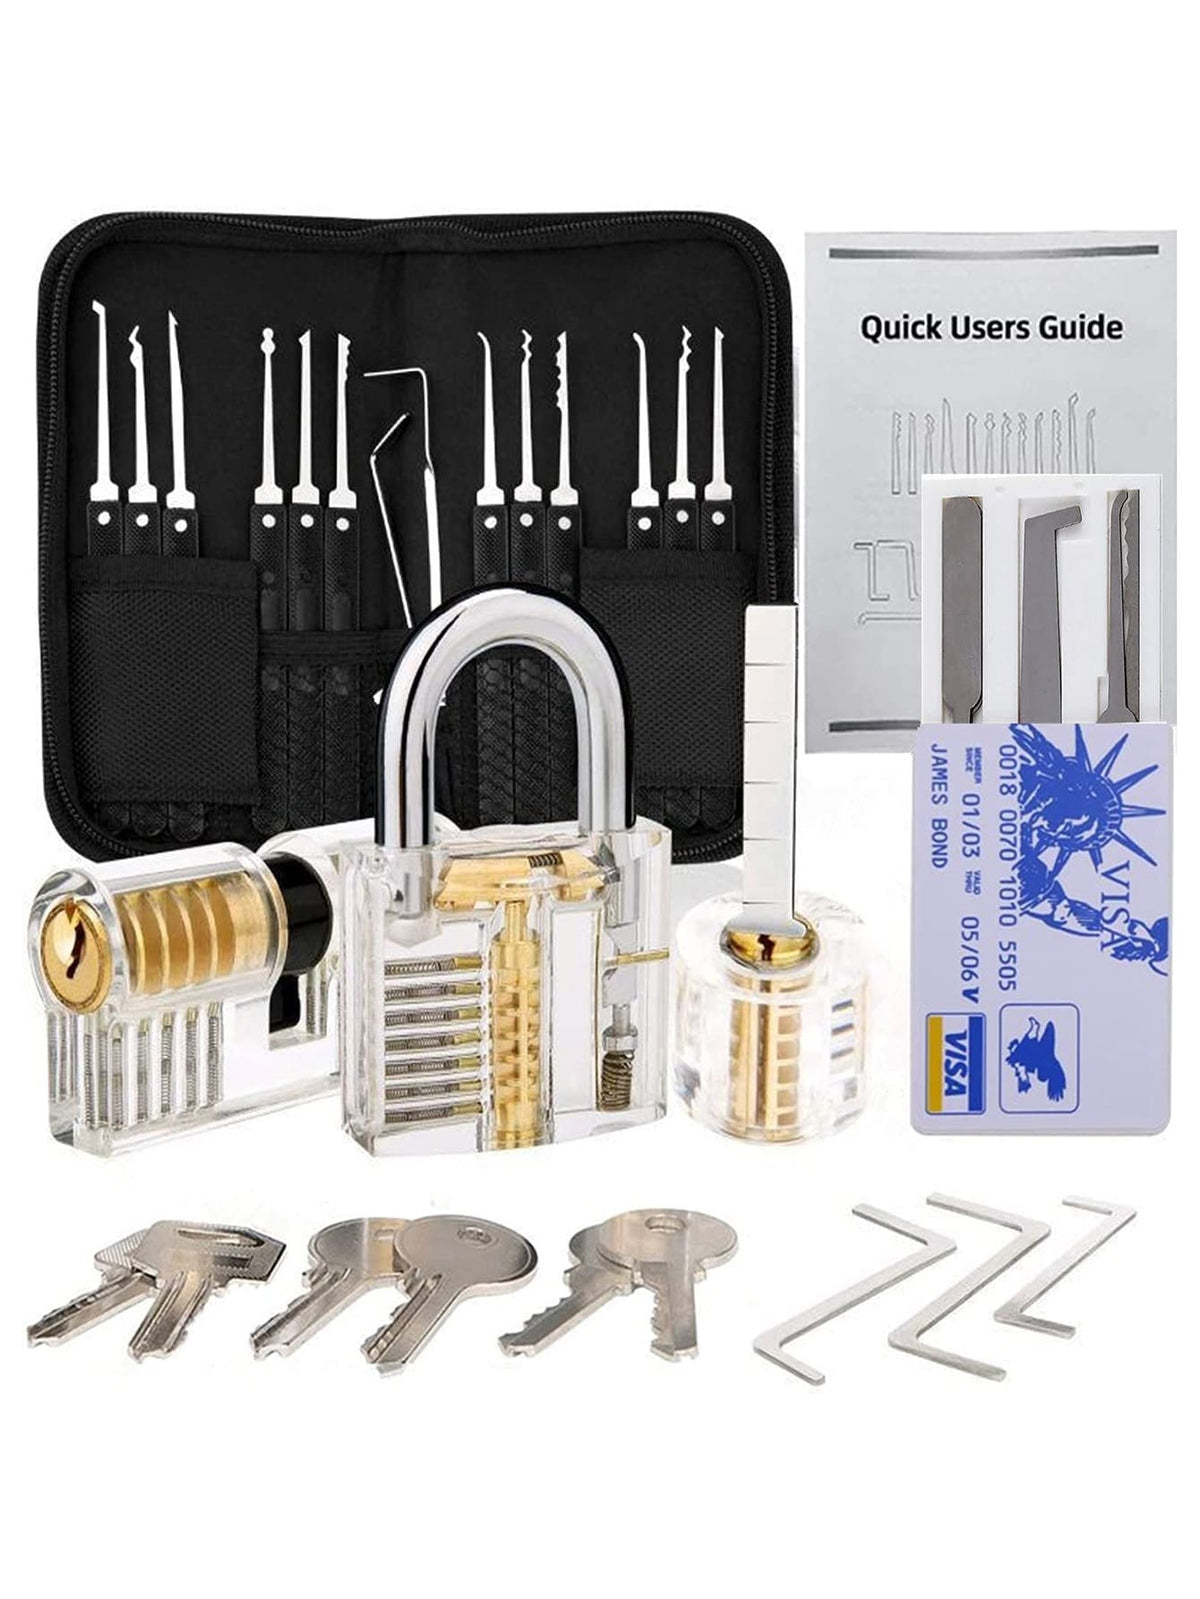 Professional 17-Piece Lock Pick Set with 3 Transparent Padlock LockSmith Tool 1 Credit Card lockpick set